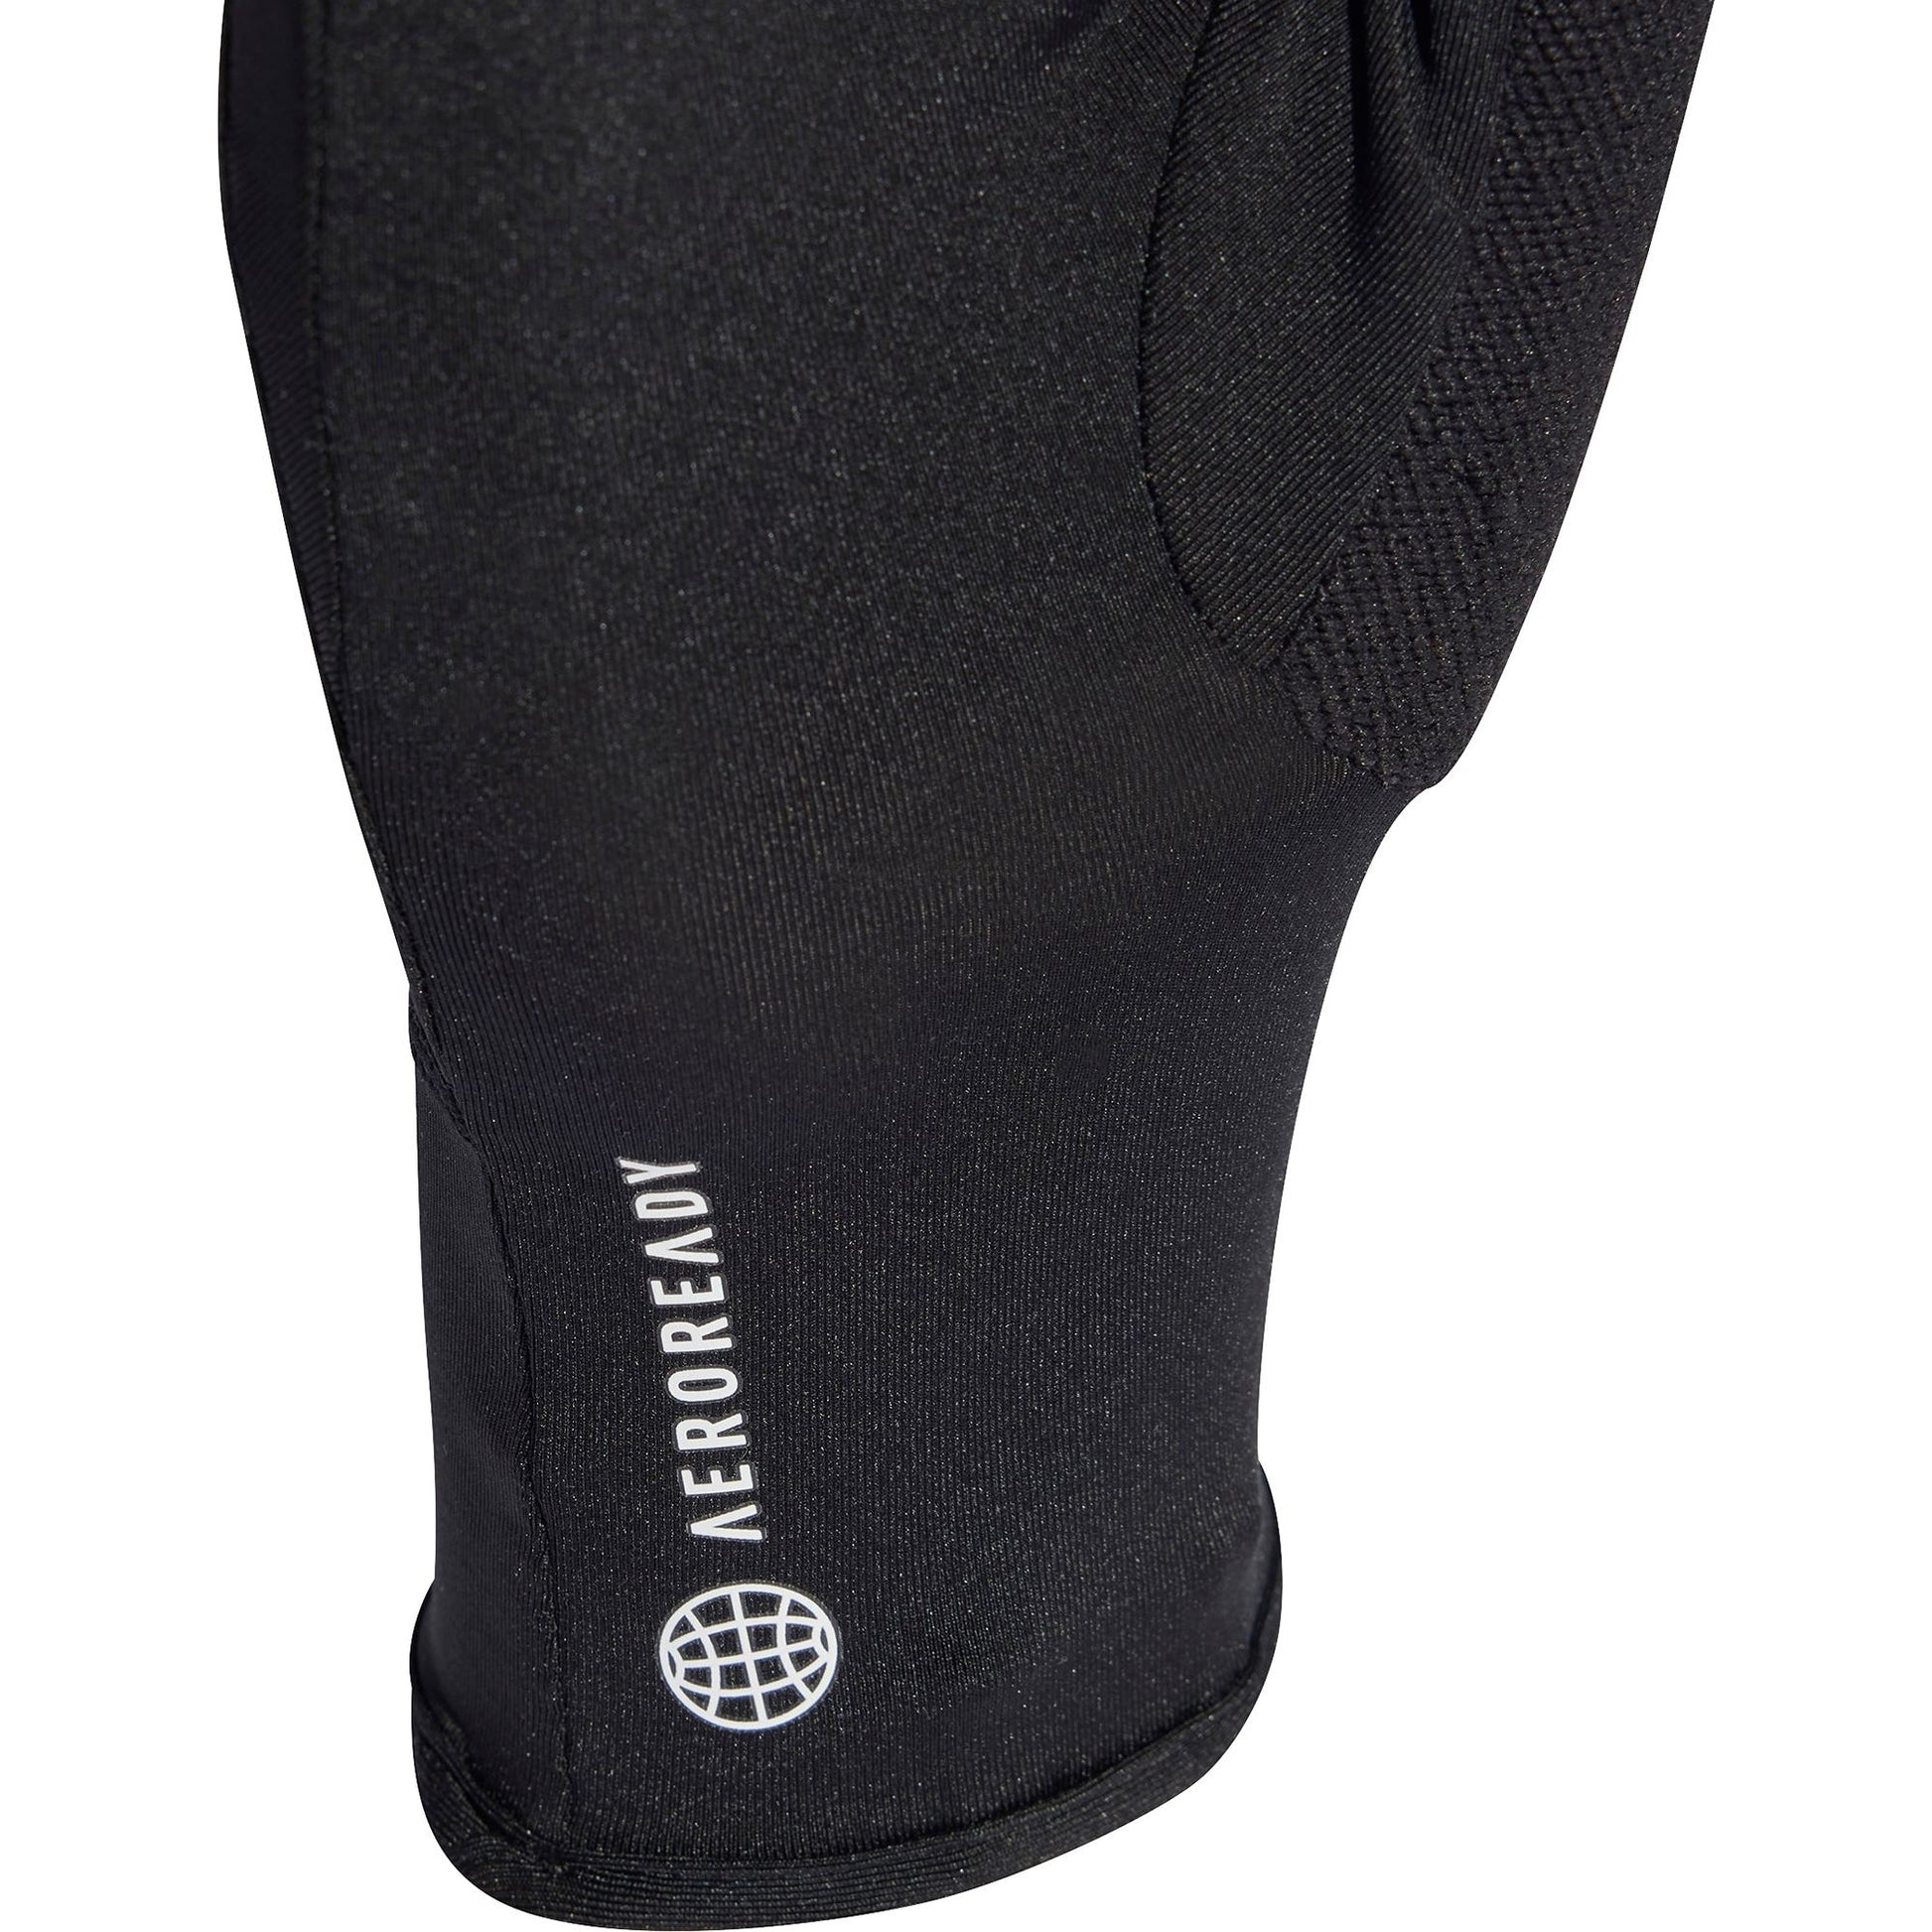 Adidas Aeroready Gloves Ht3904 Details